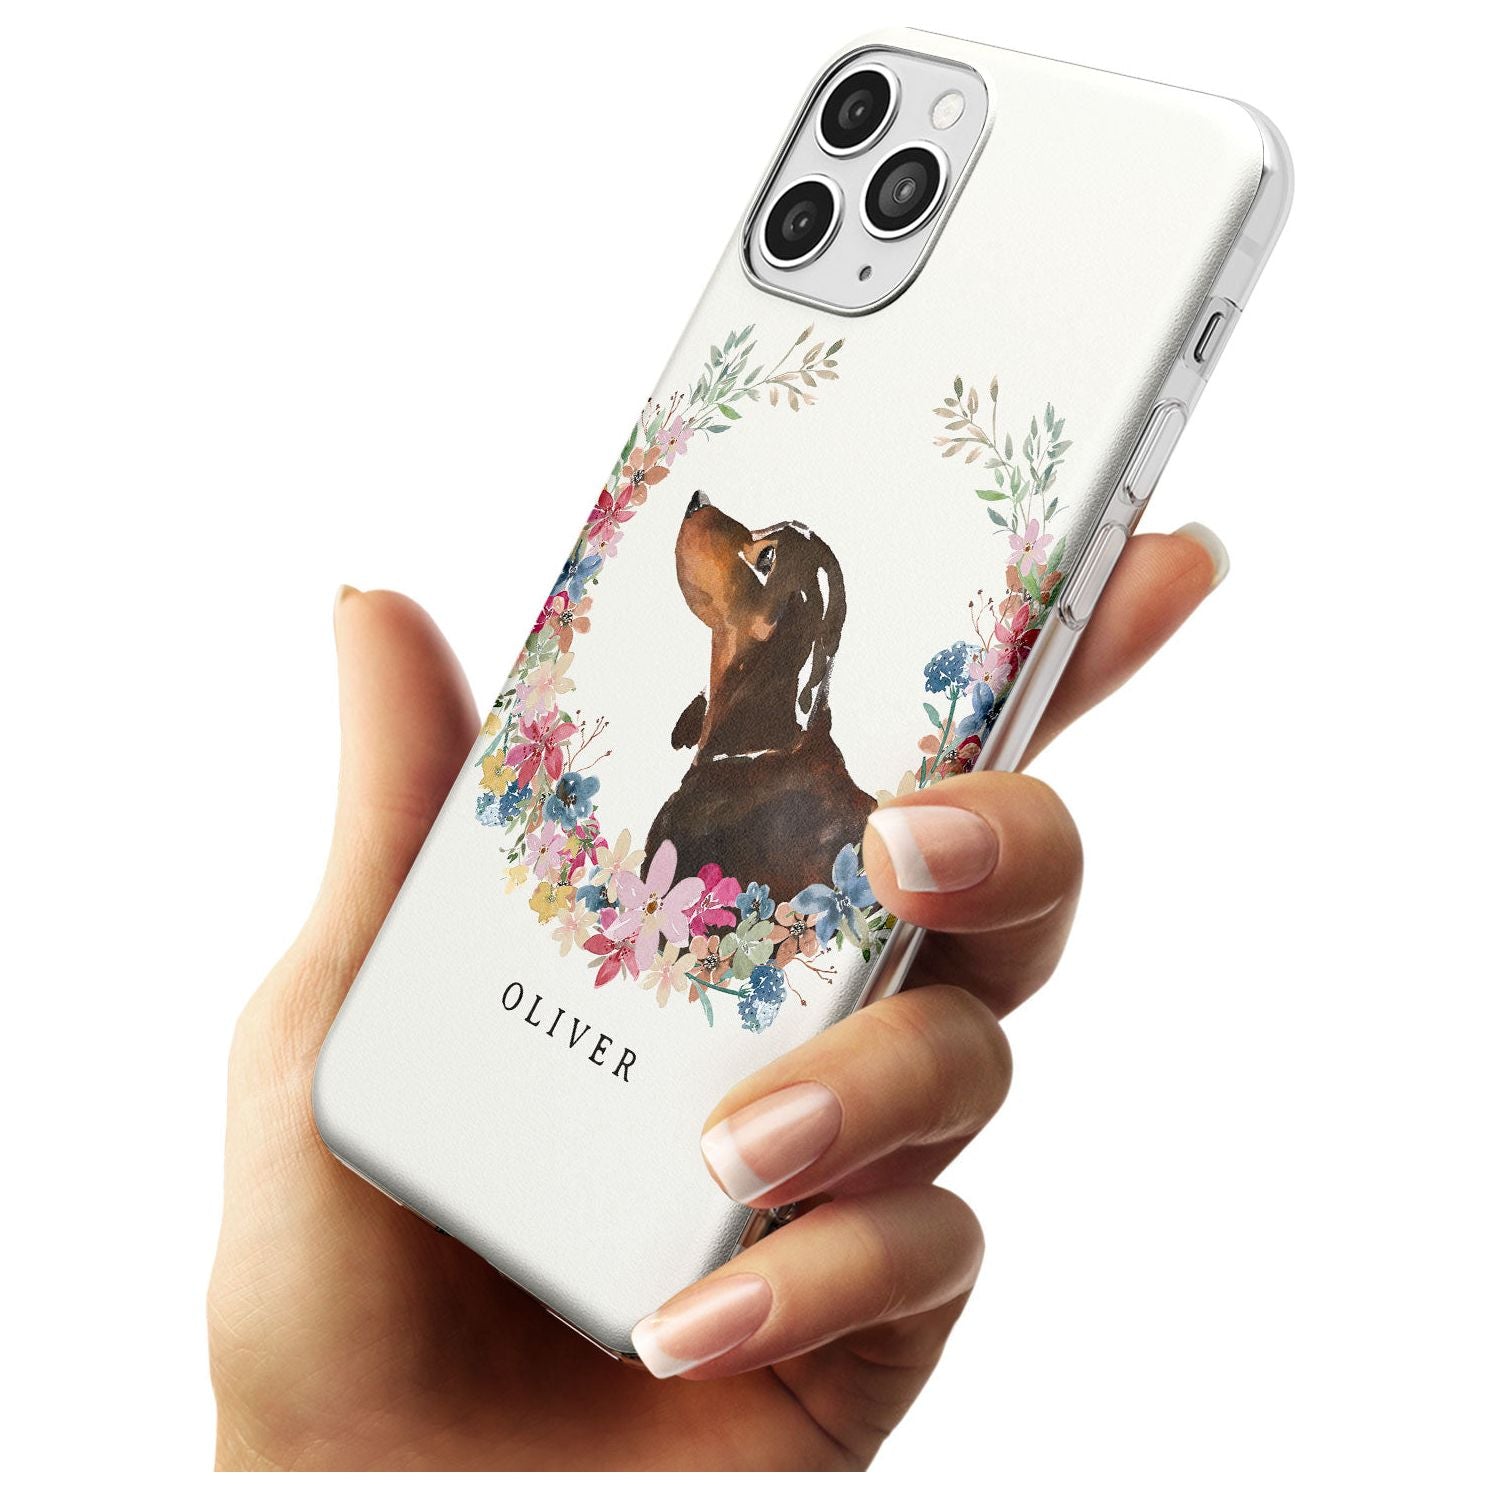 Black & Tan Dachshund - Watercolour Dog Portrait Slim TPU Phone Case for iPhone 11 Pro Max